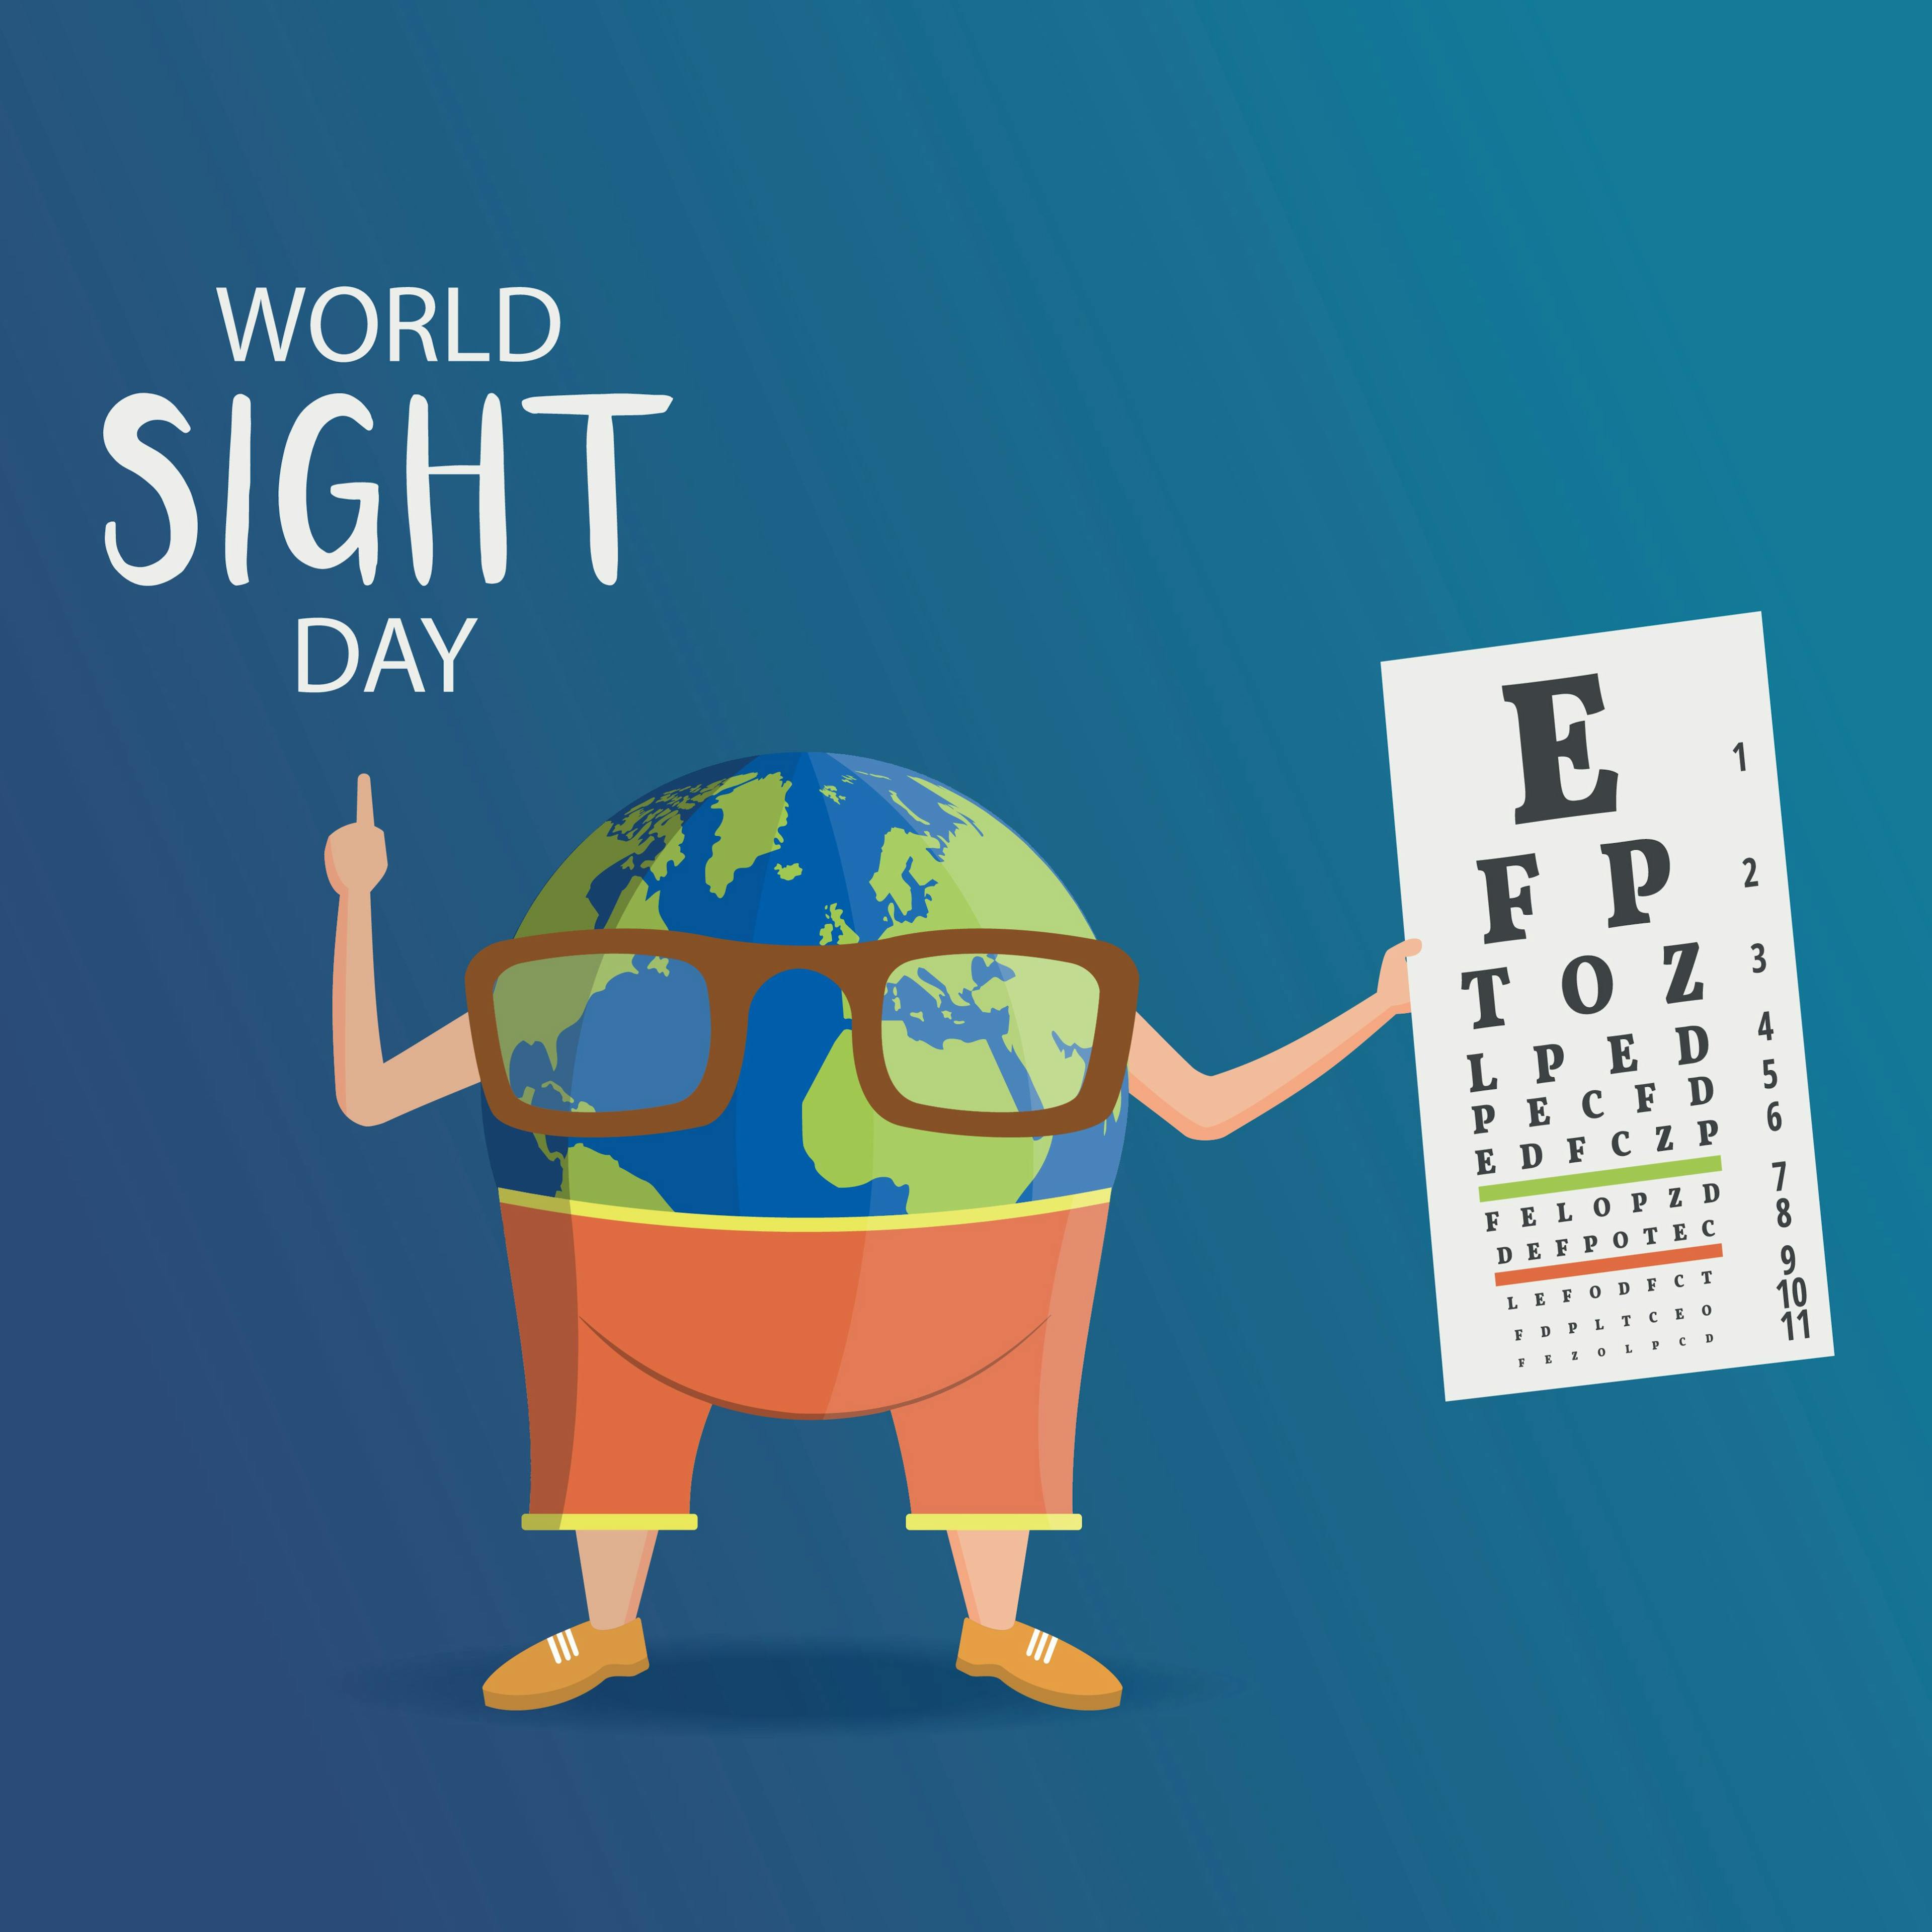 World Sight Day 2020 kicks off today